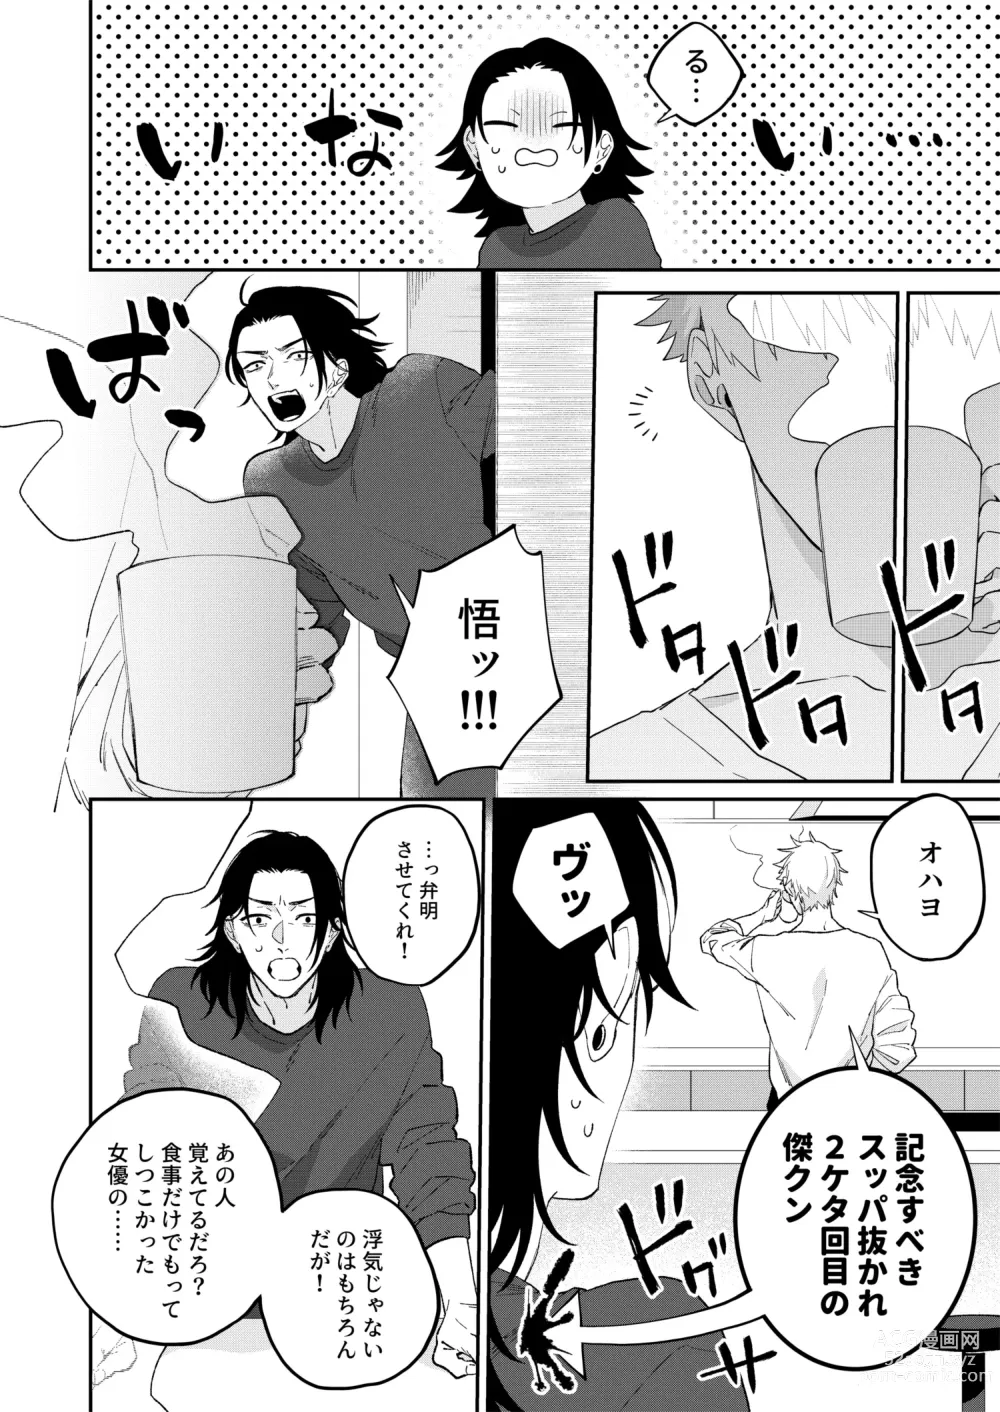 Page 4 of doujinshi GeGo wa Genjitsu nanode Scandal NG desu!!!